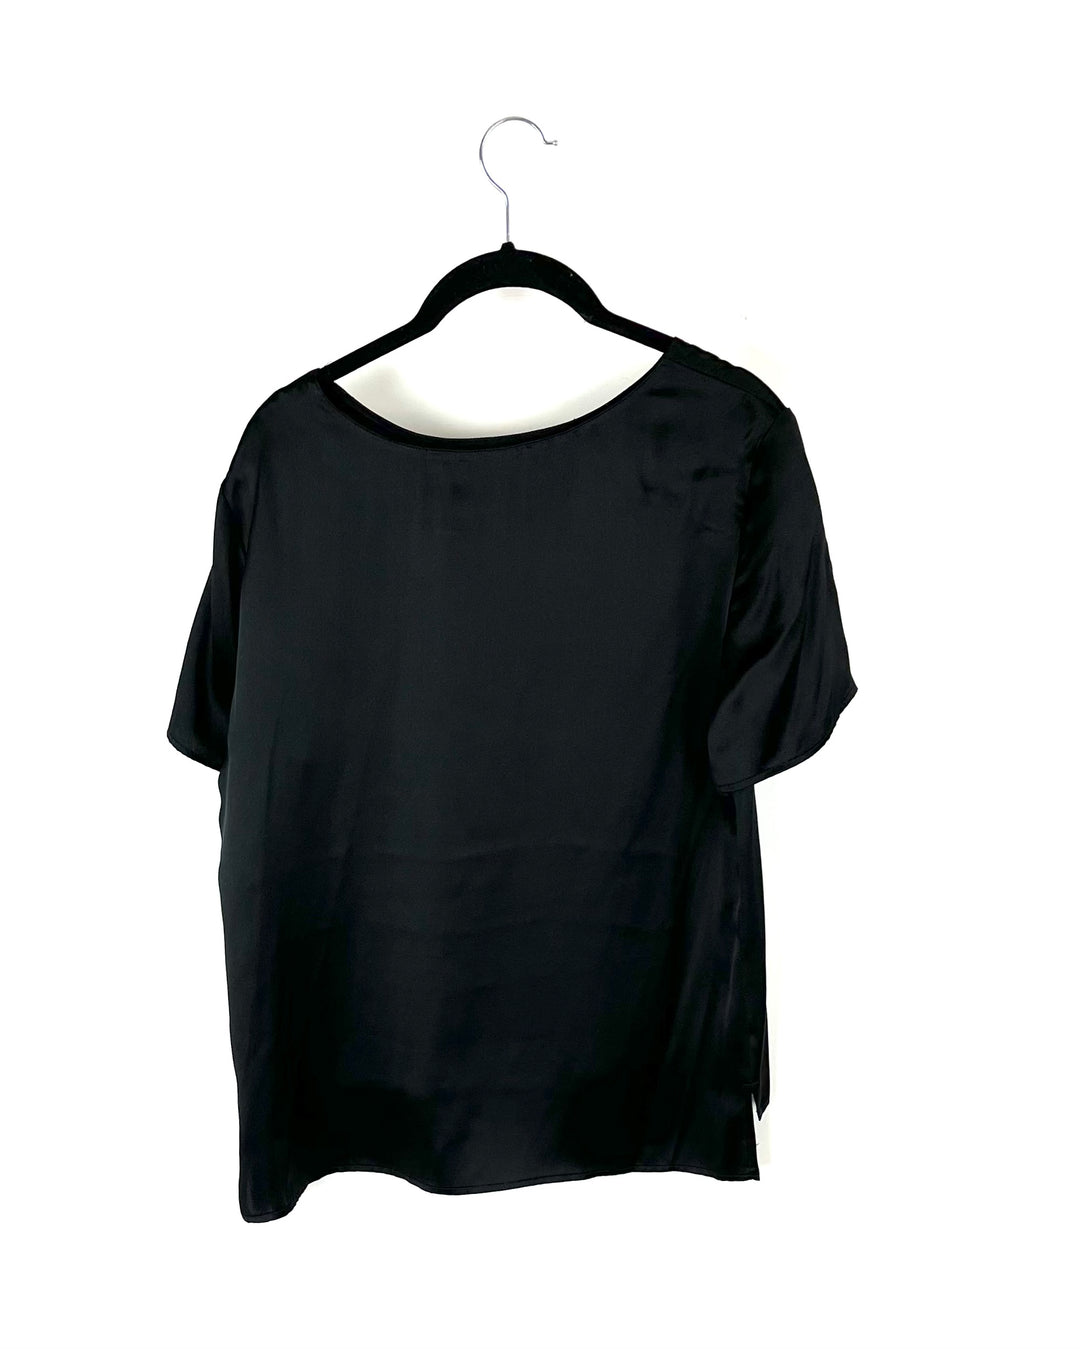 Black Silk Top - Size 4/6